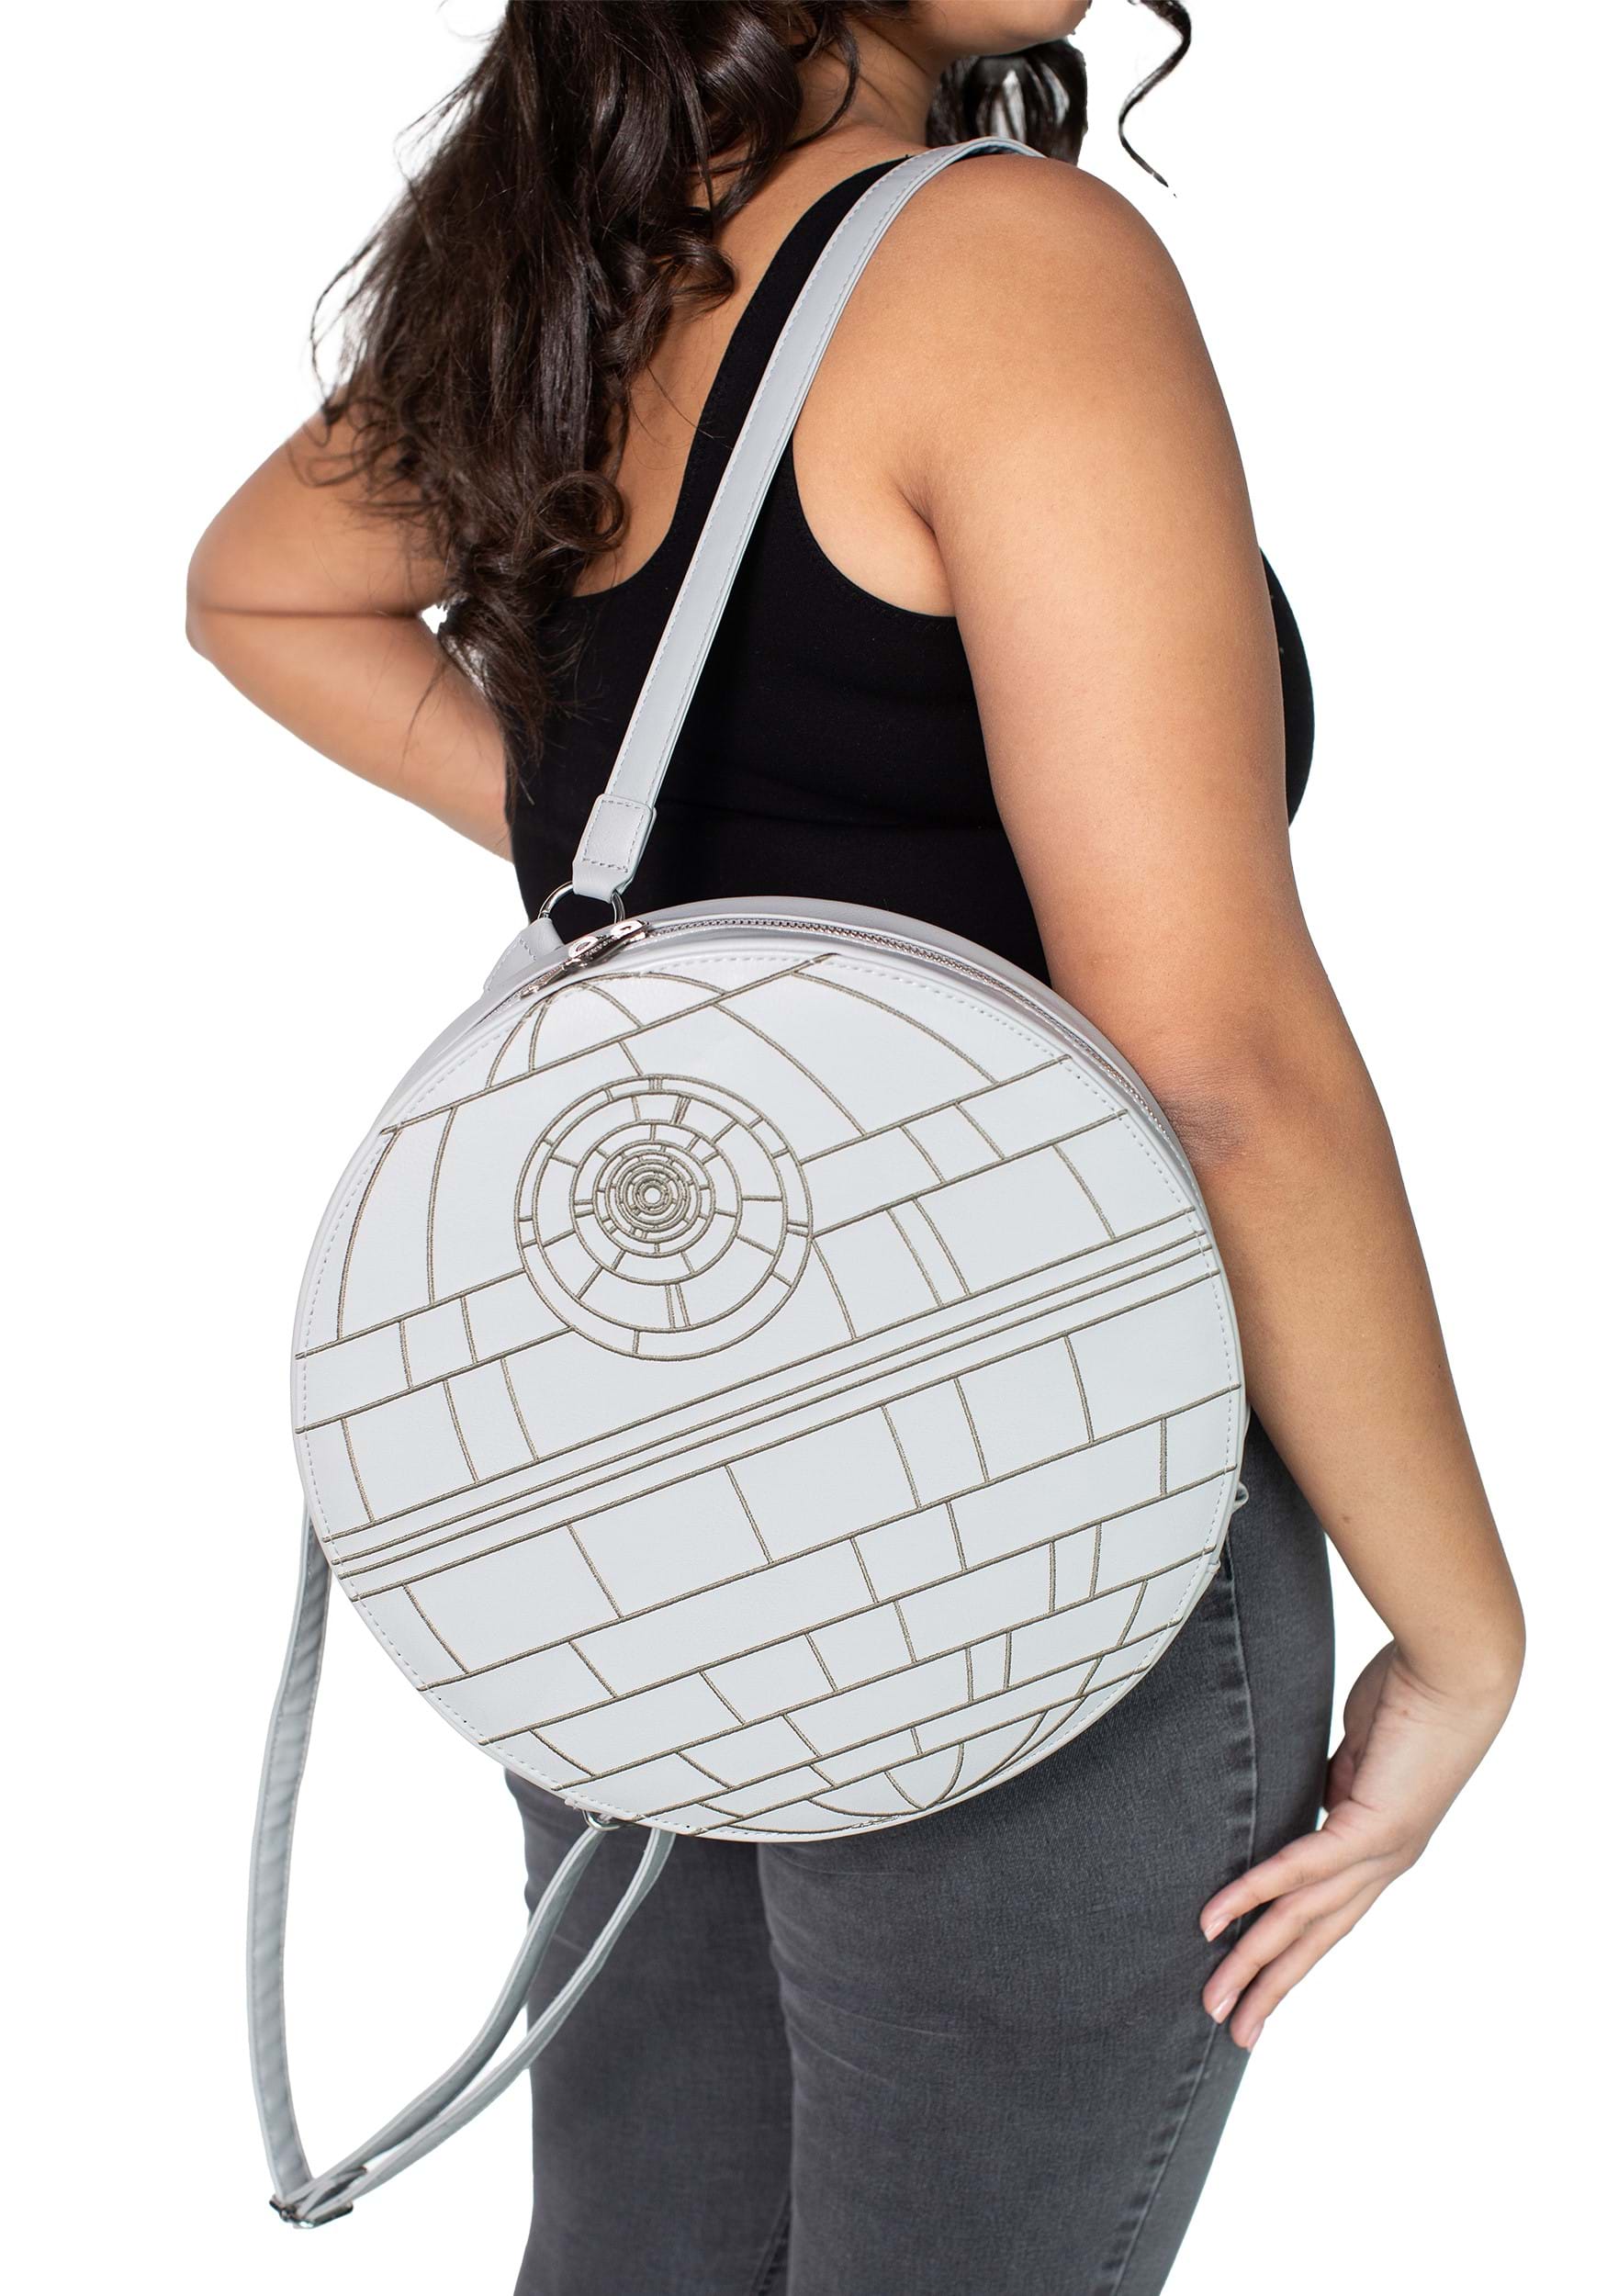 Star Wars Cakeworthy Death Star Backpack